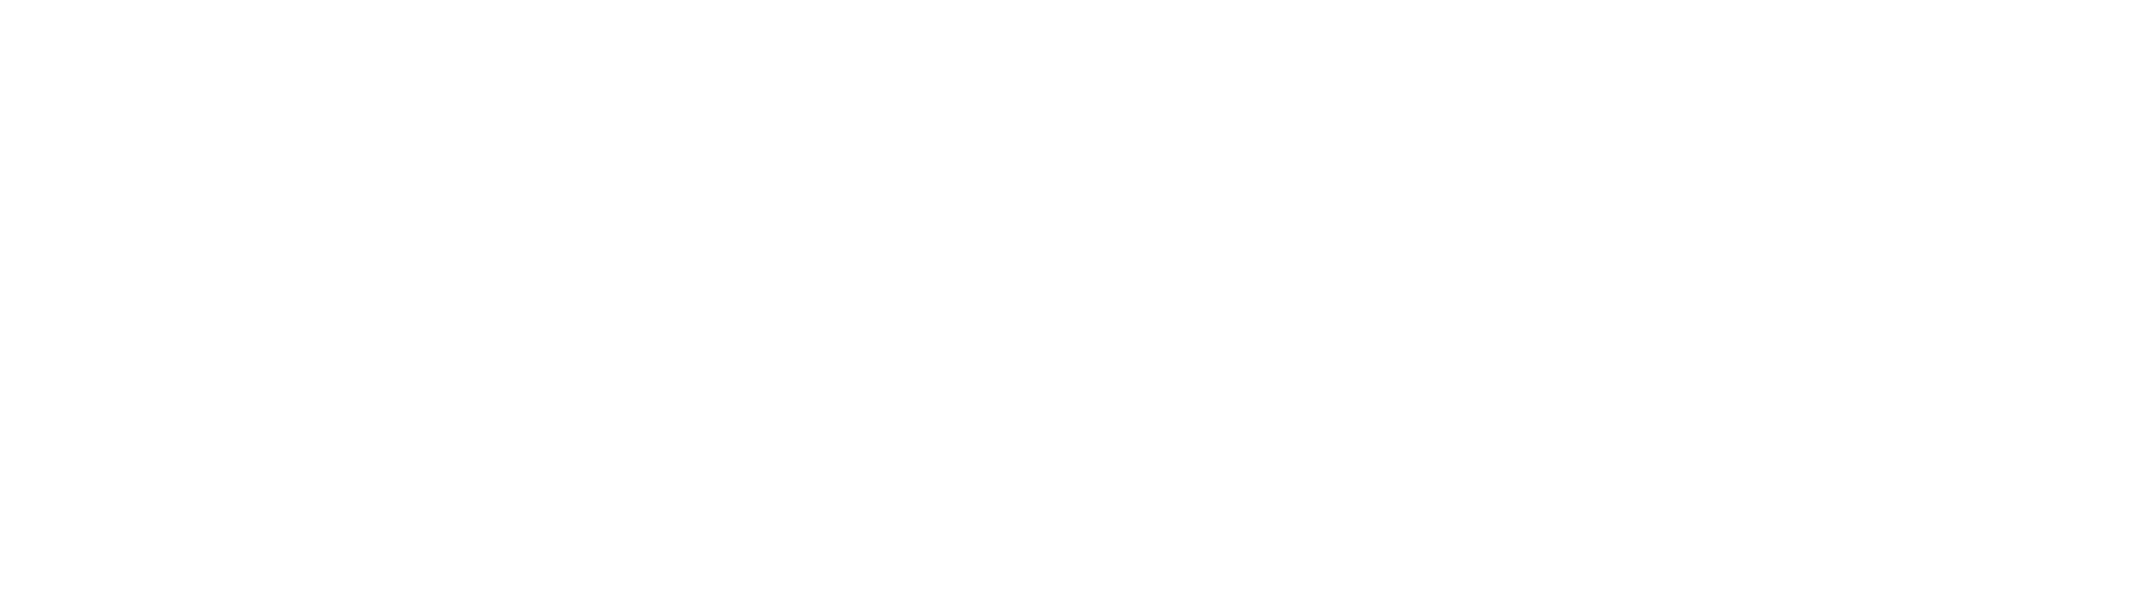 Zemuria logo in png format